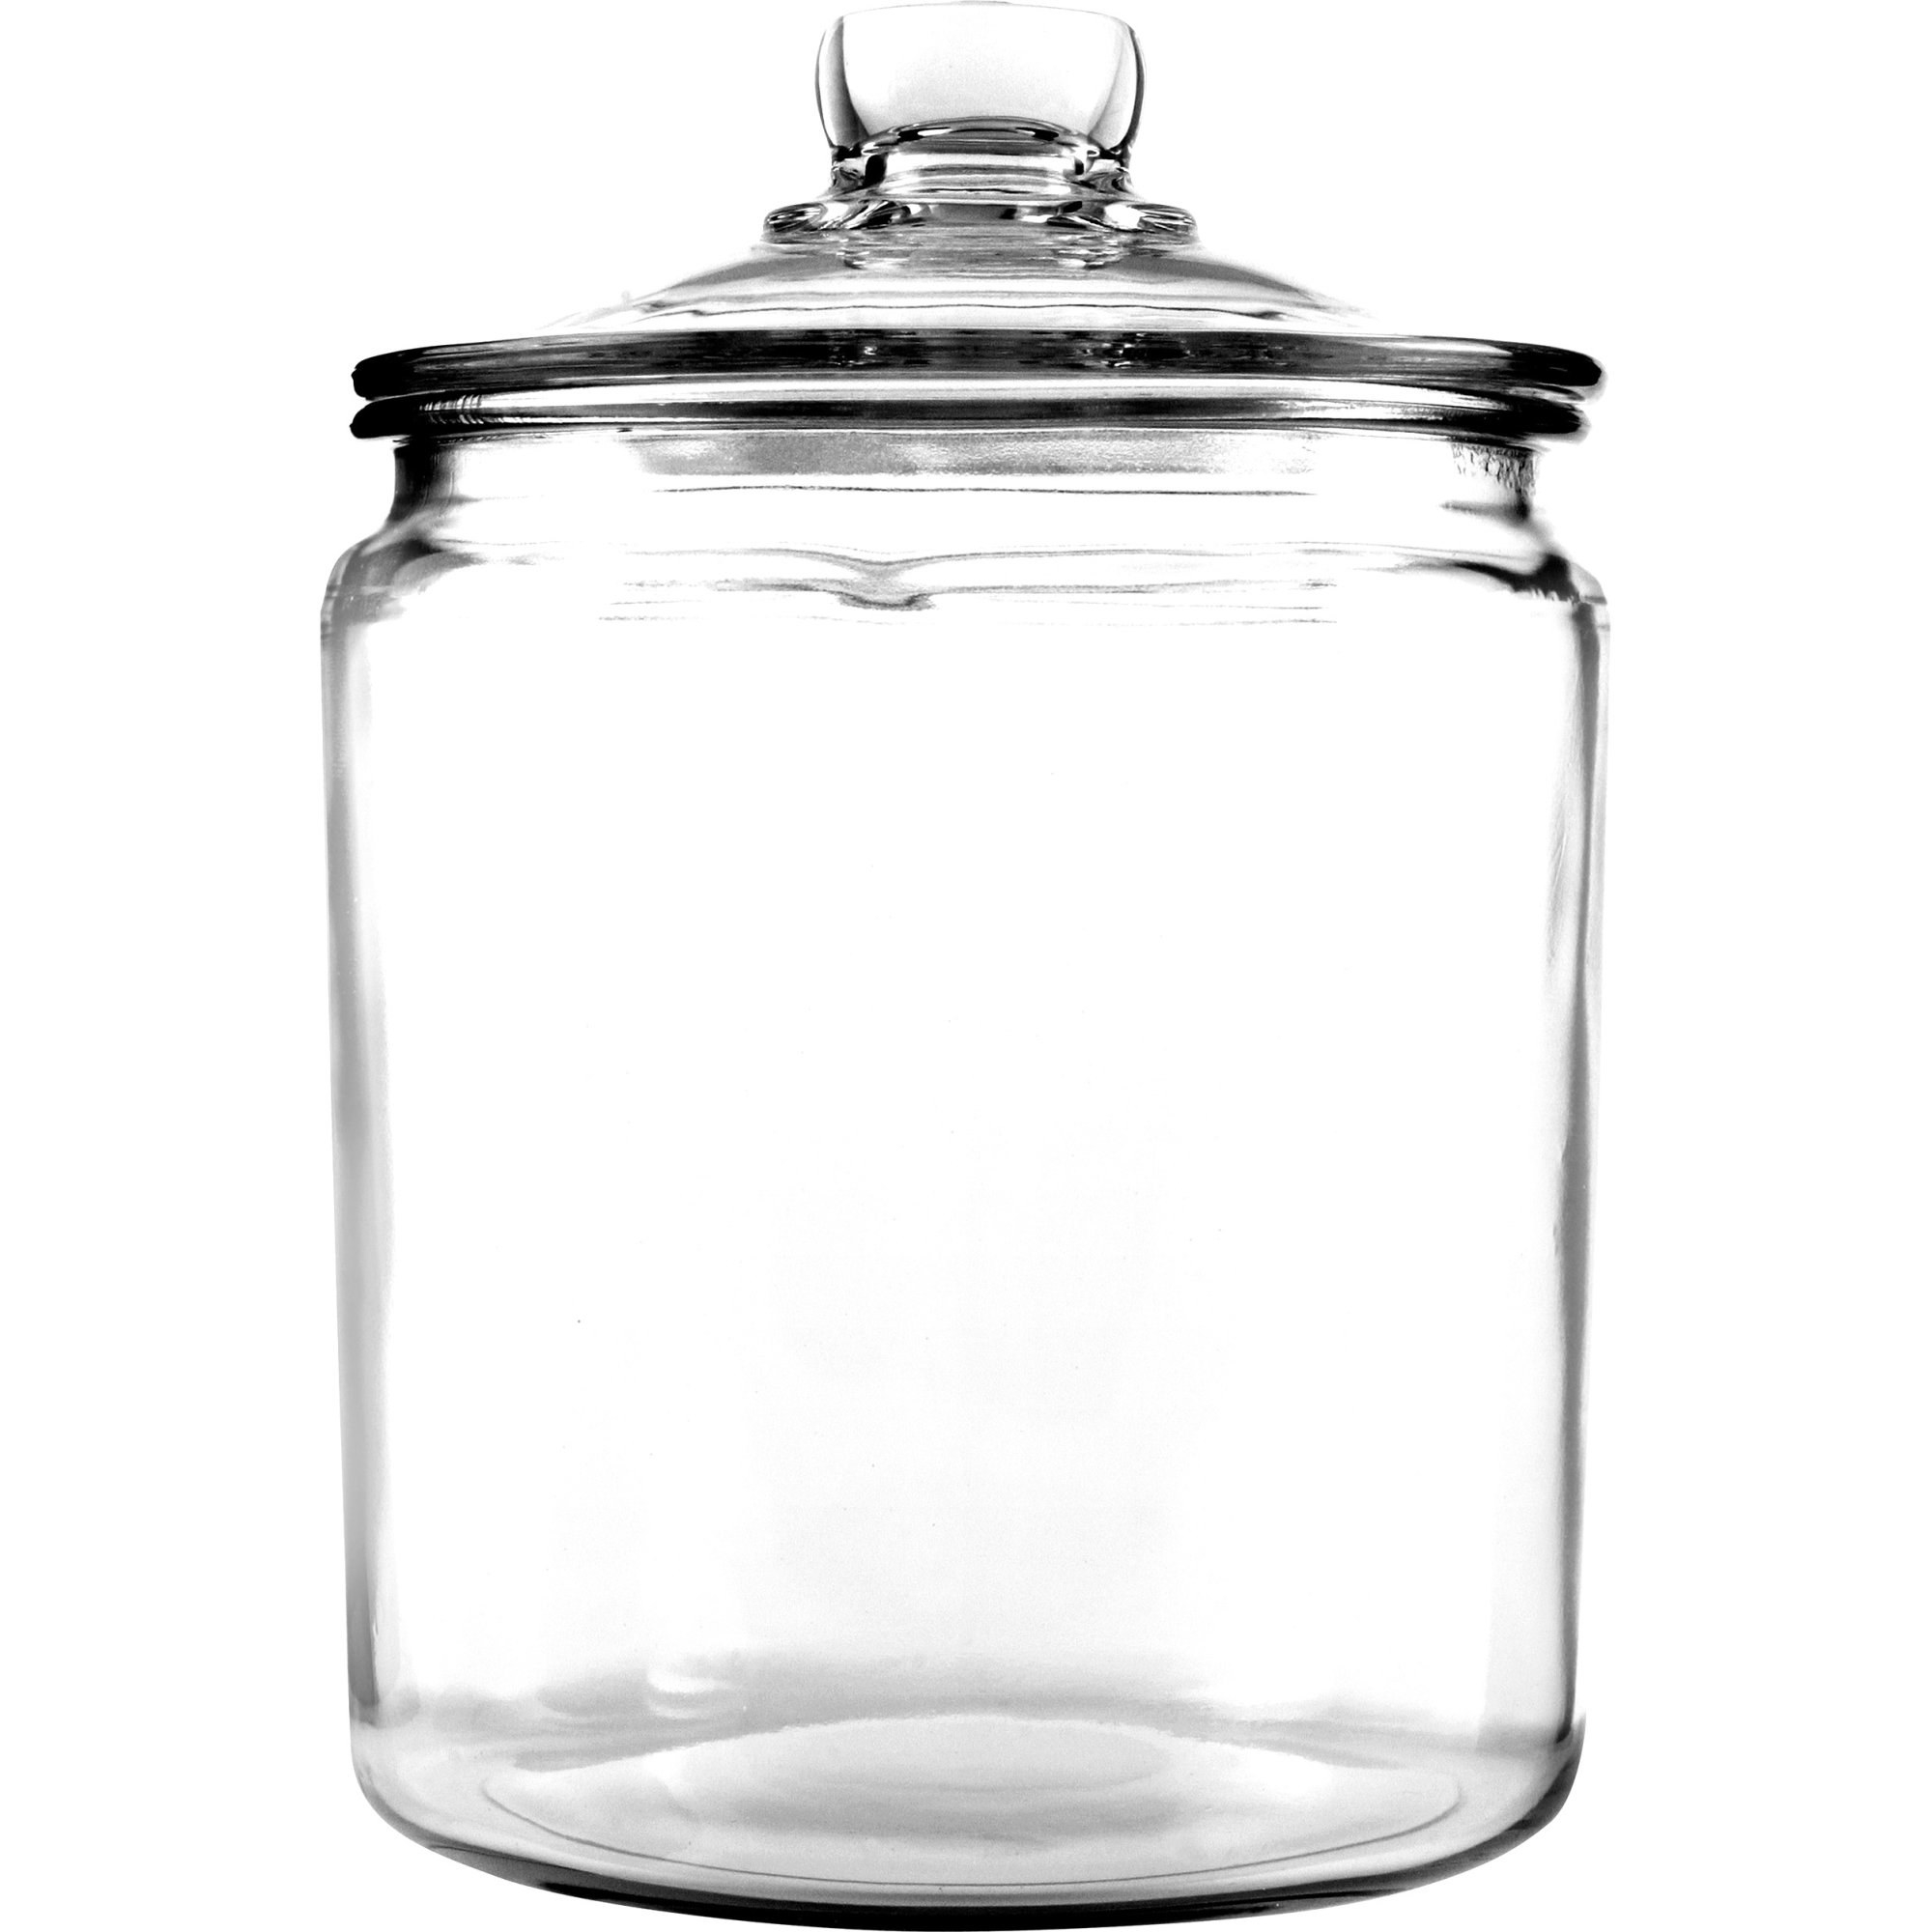 the glass jar